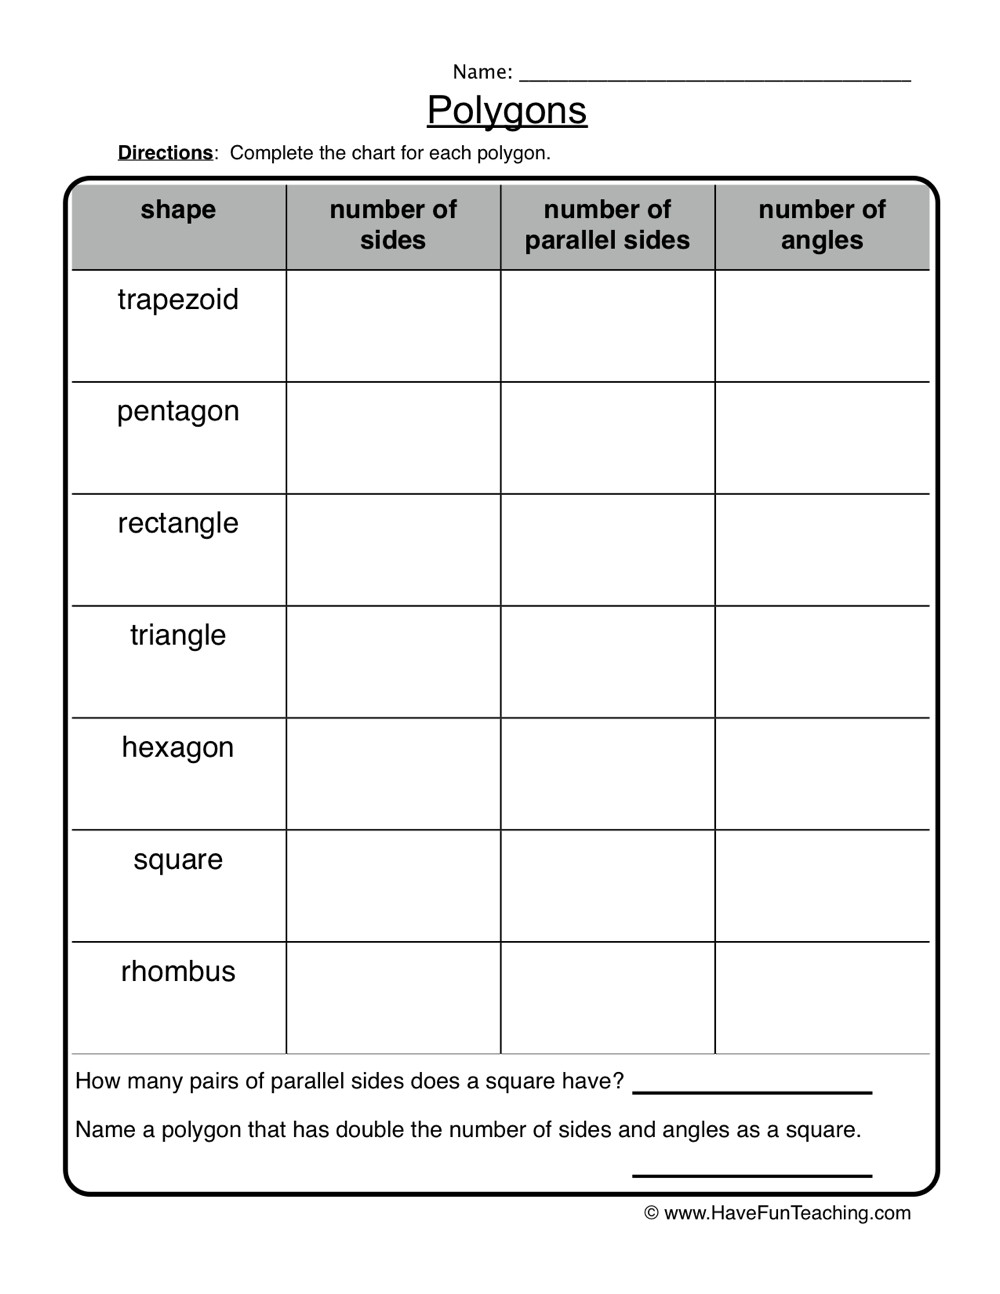 Polygons Worksheets 5th Grade Polygons attributes Worksheet